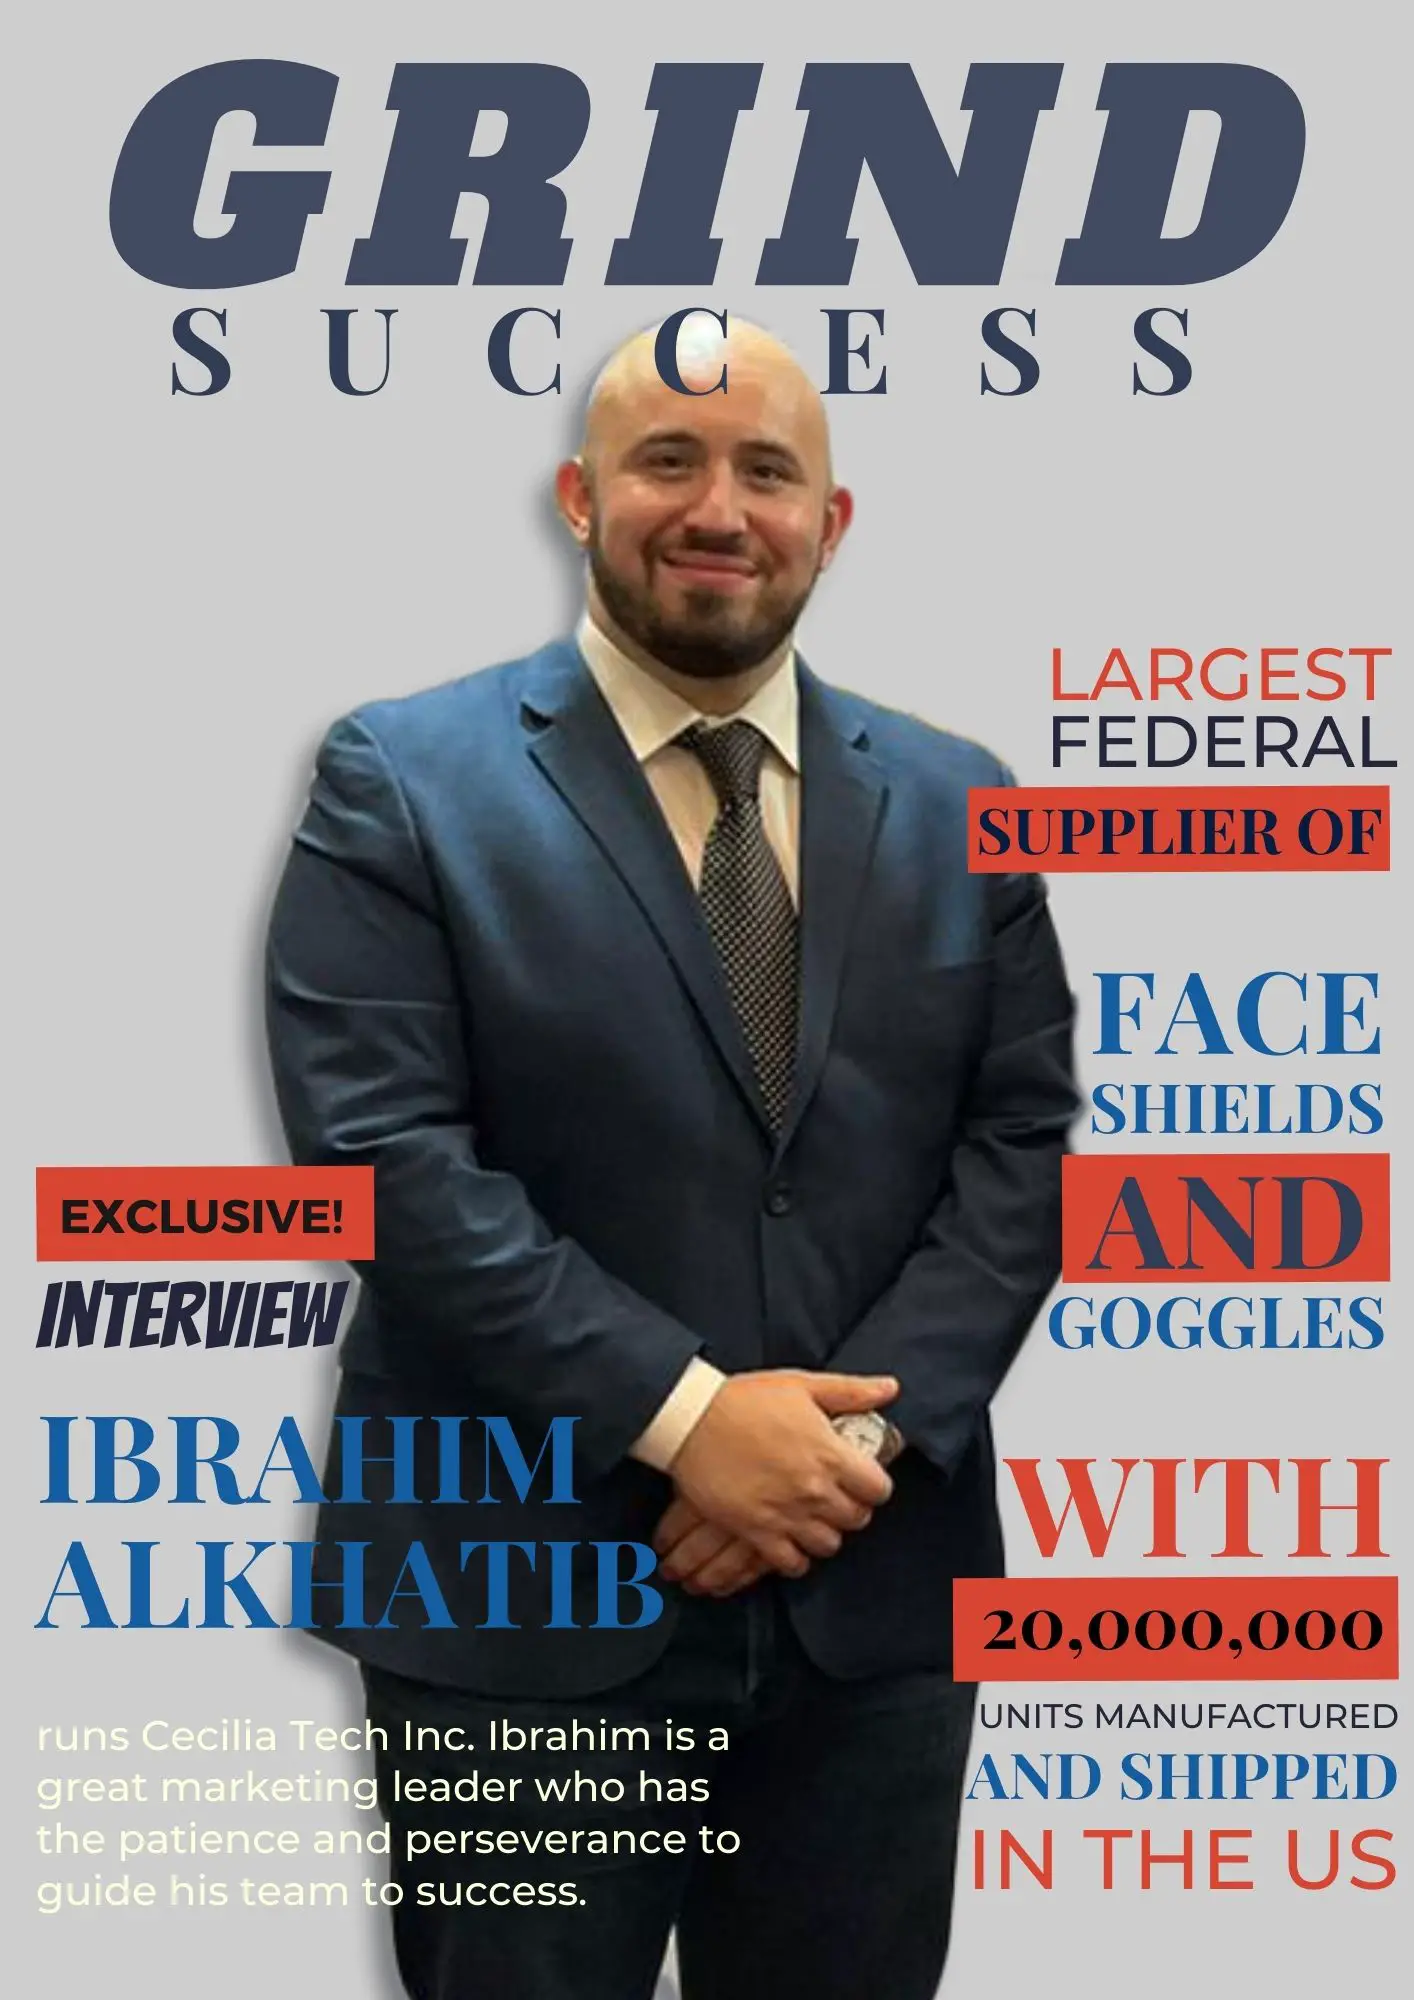 Meet Ibrahim Alkhatib, Vice President & Business Development at Cecilia Tech, Inc